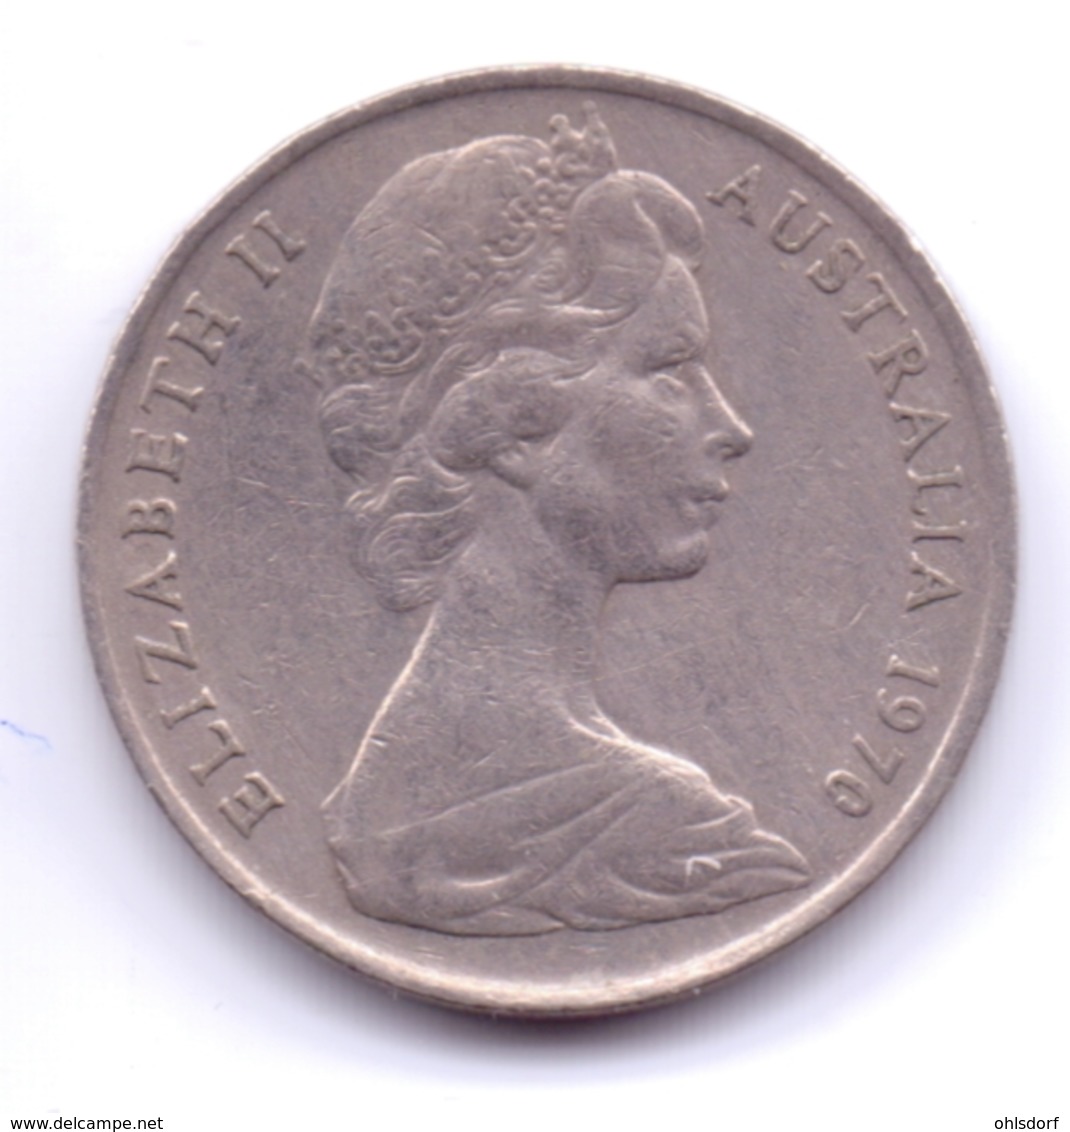 AUSTRALIA 1970: 10 Cents, KM 65 - 10 Cents